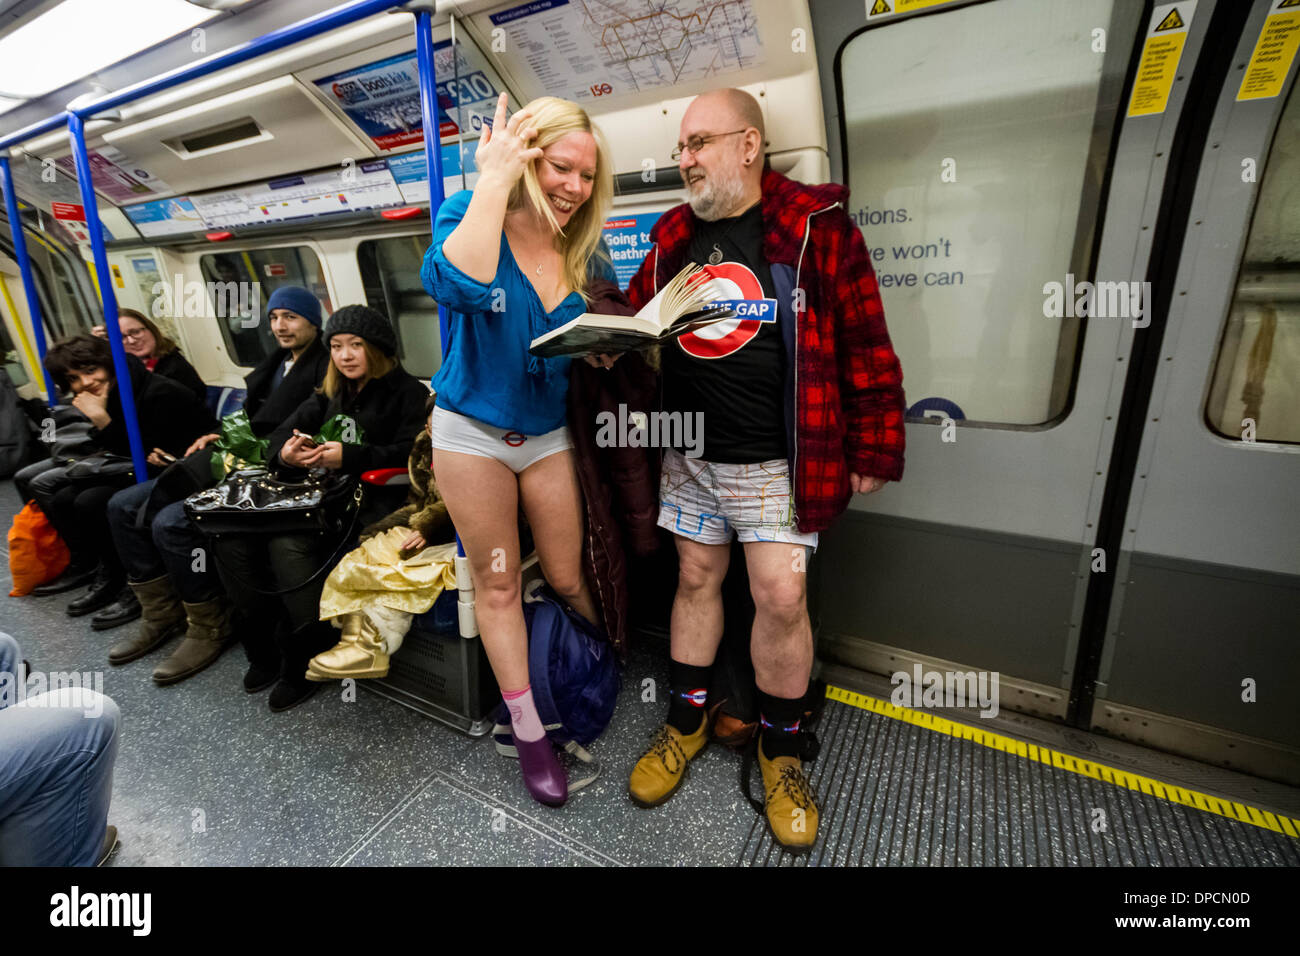 No Pants on Tube ride - London underground commuters flash